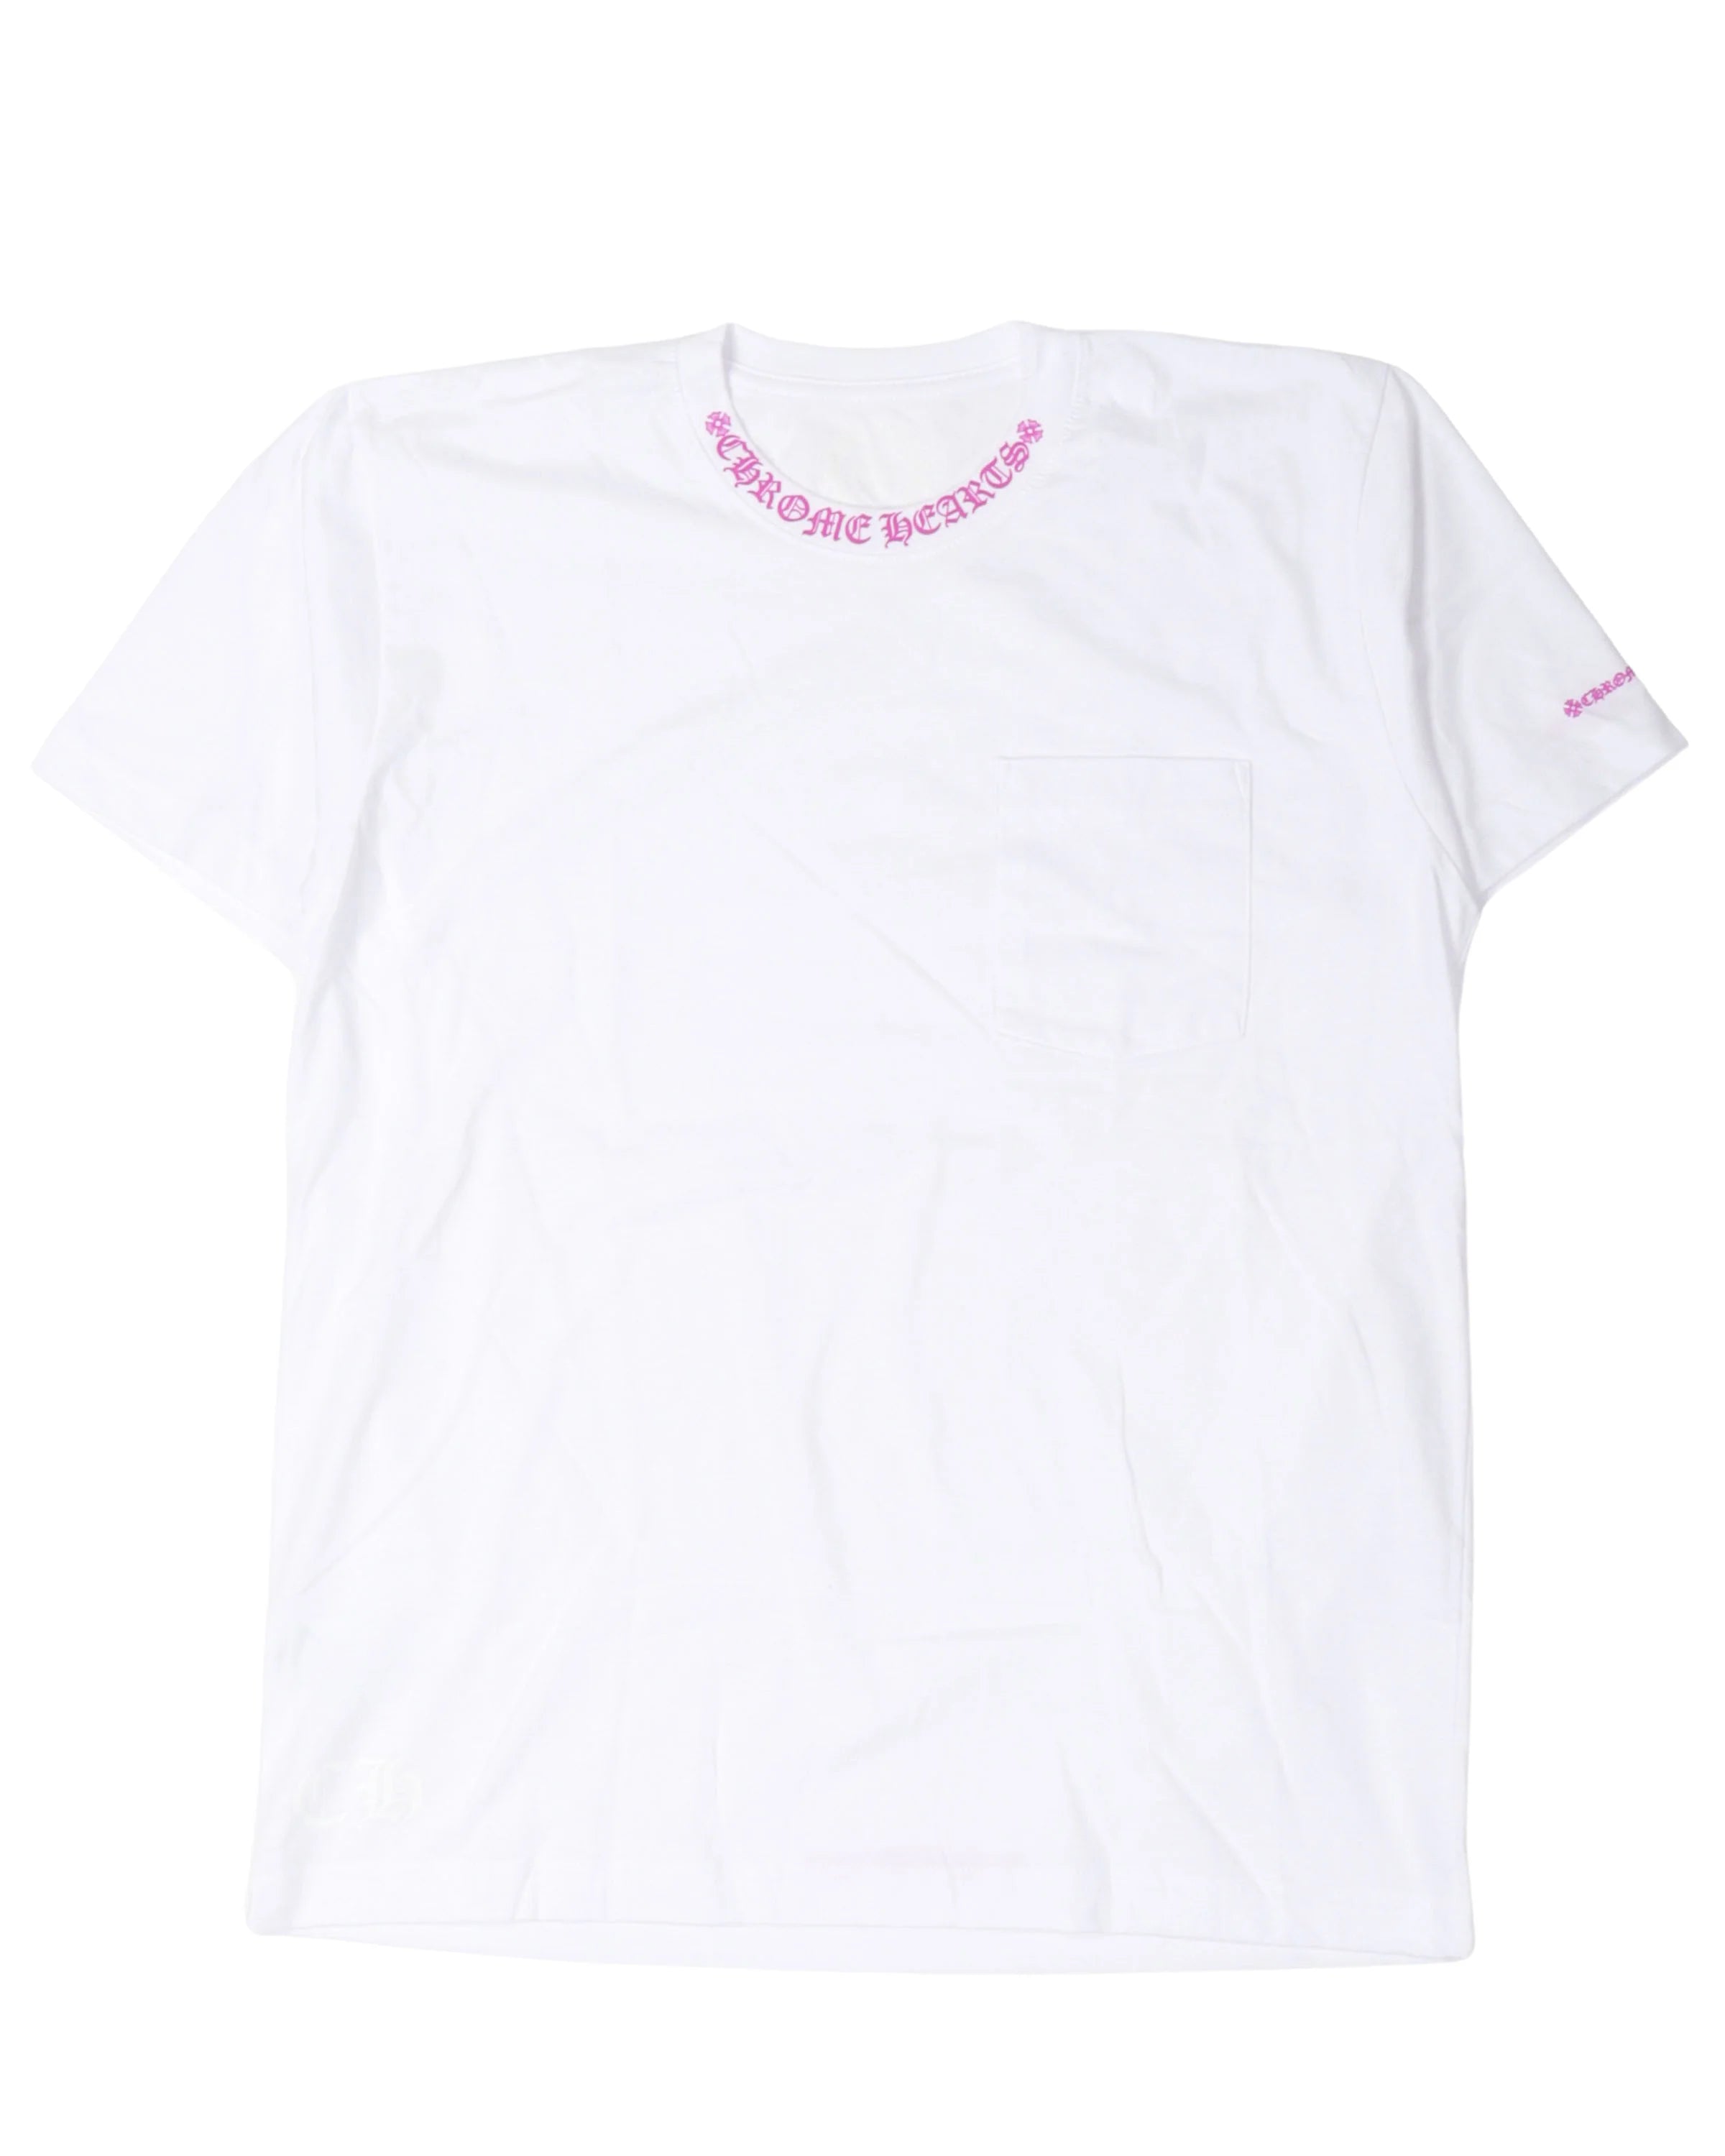 Chrome Hearts Collar Logo T-Shirt White Pink